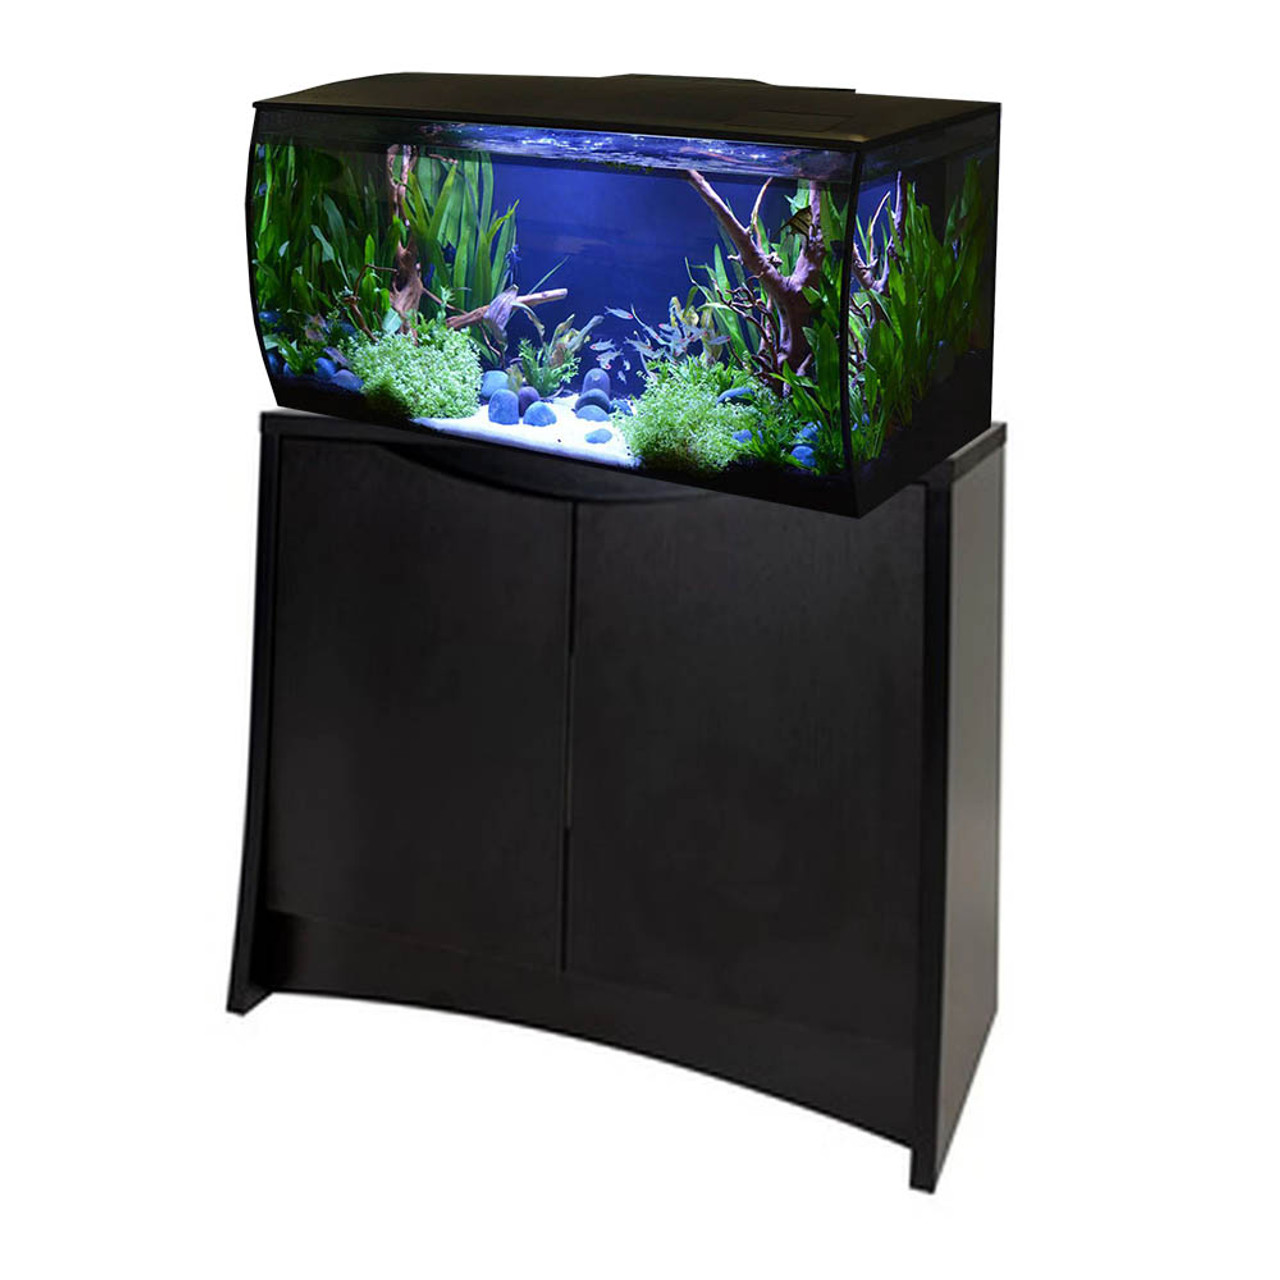 FLEX Freshwater Aquarium Kit w/Stand (32.5 Gallons) Black - Fluval